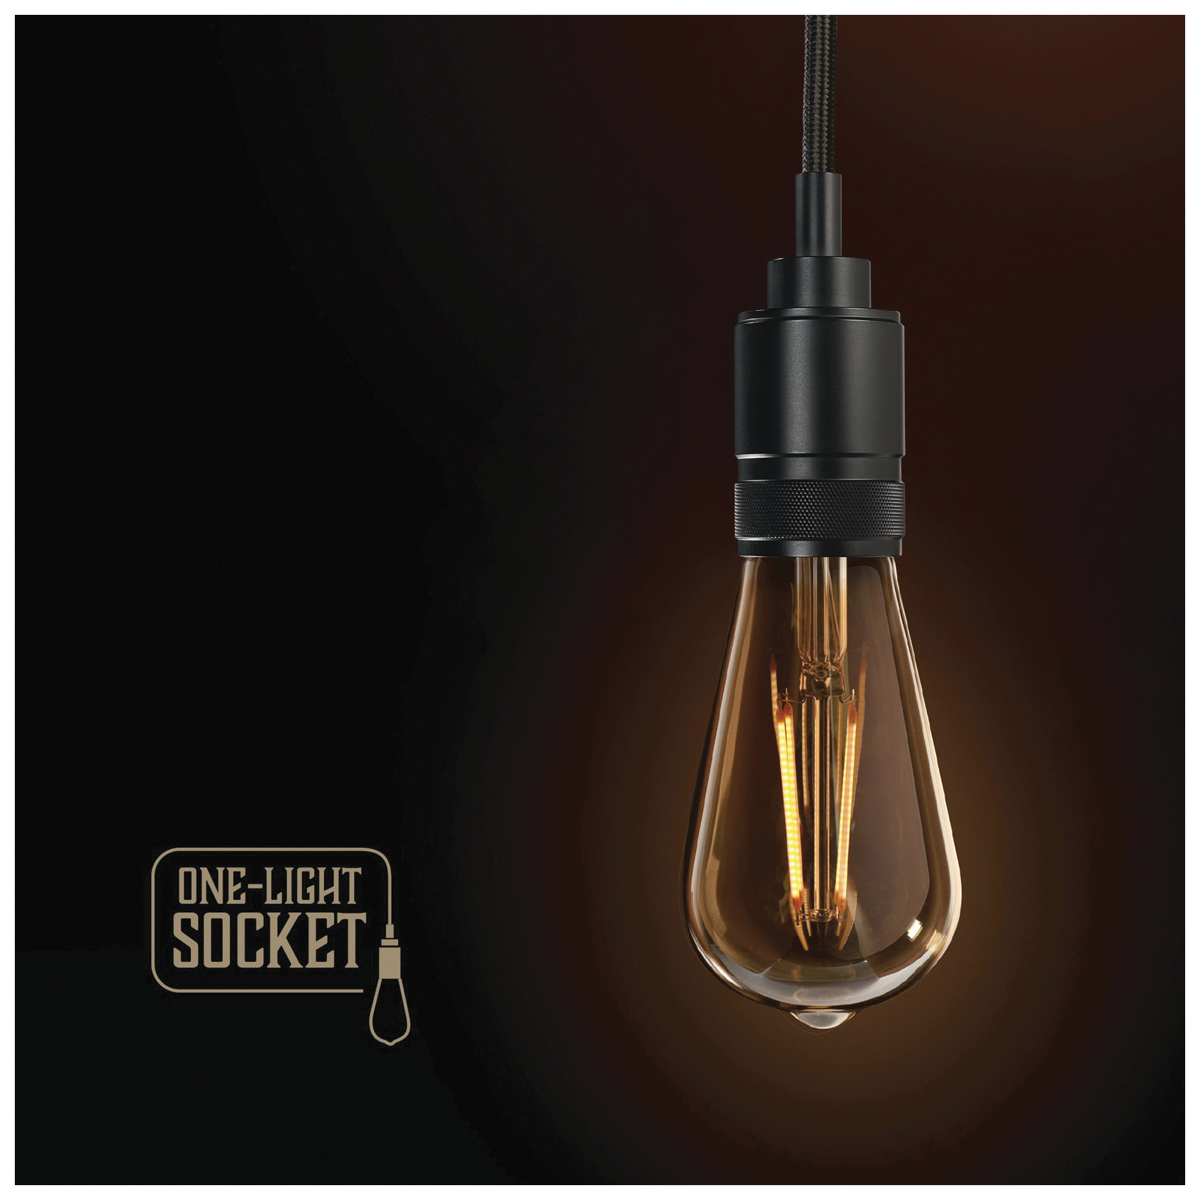 Feit Electric PN/BLK Industrial Style Pendant Light Fixture, 1-Lamp, LED Lamp, Metal Fixture, Black Fixture - 3